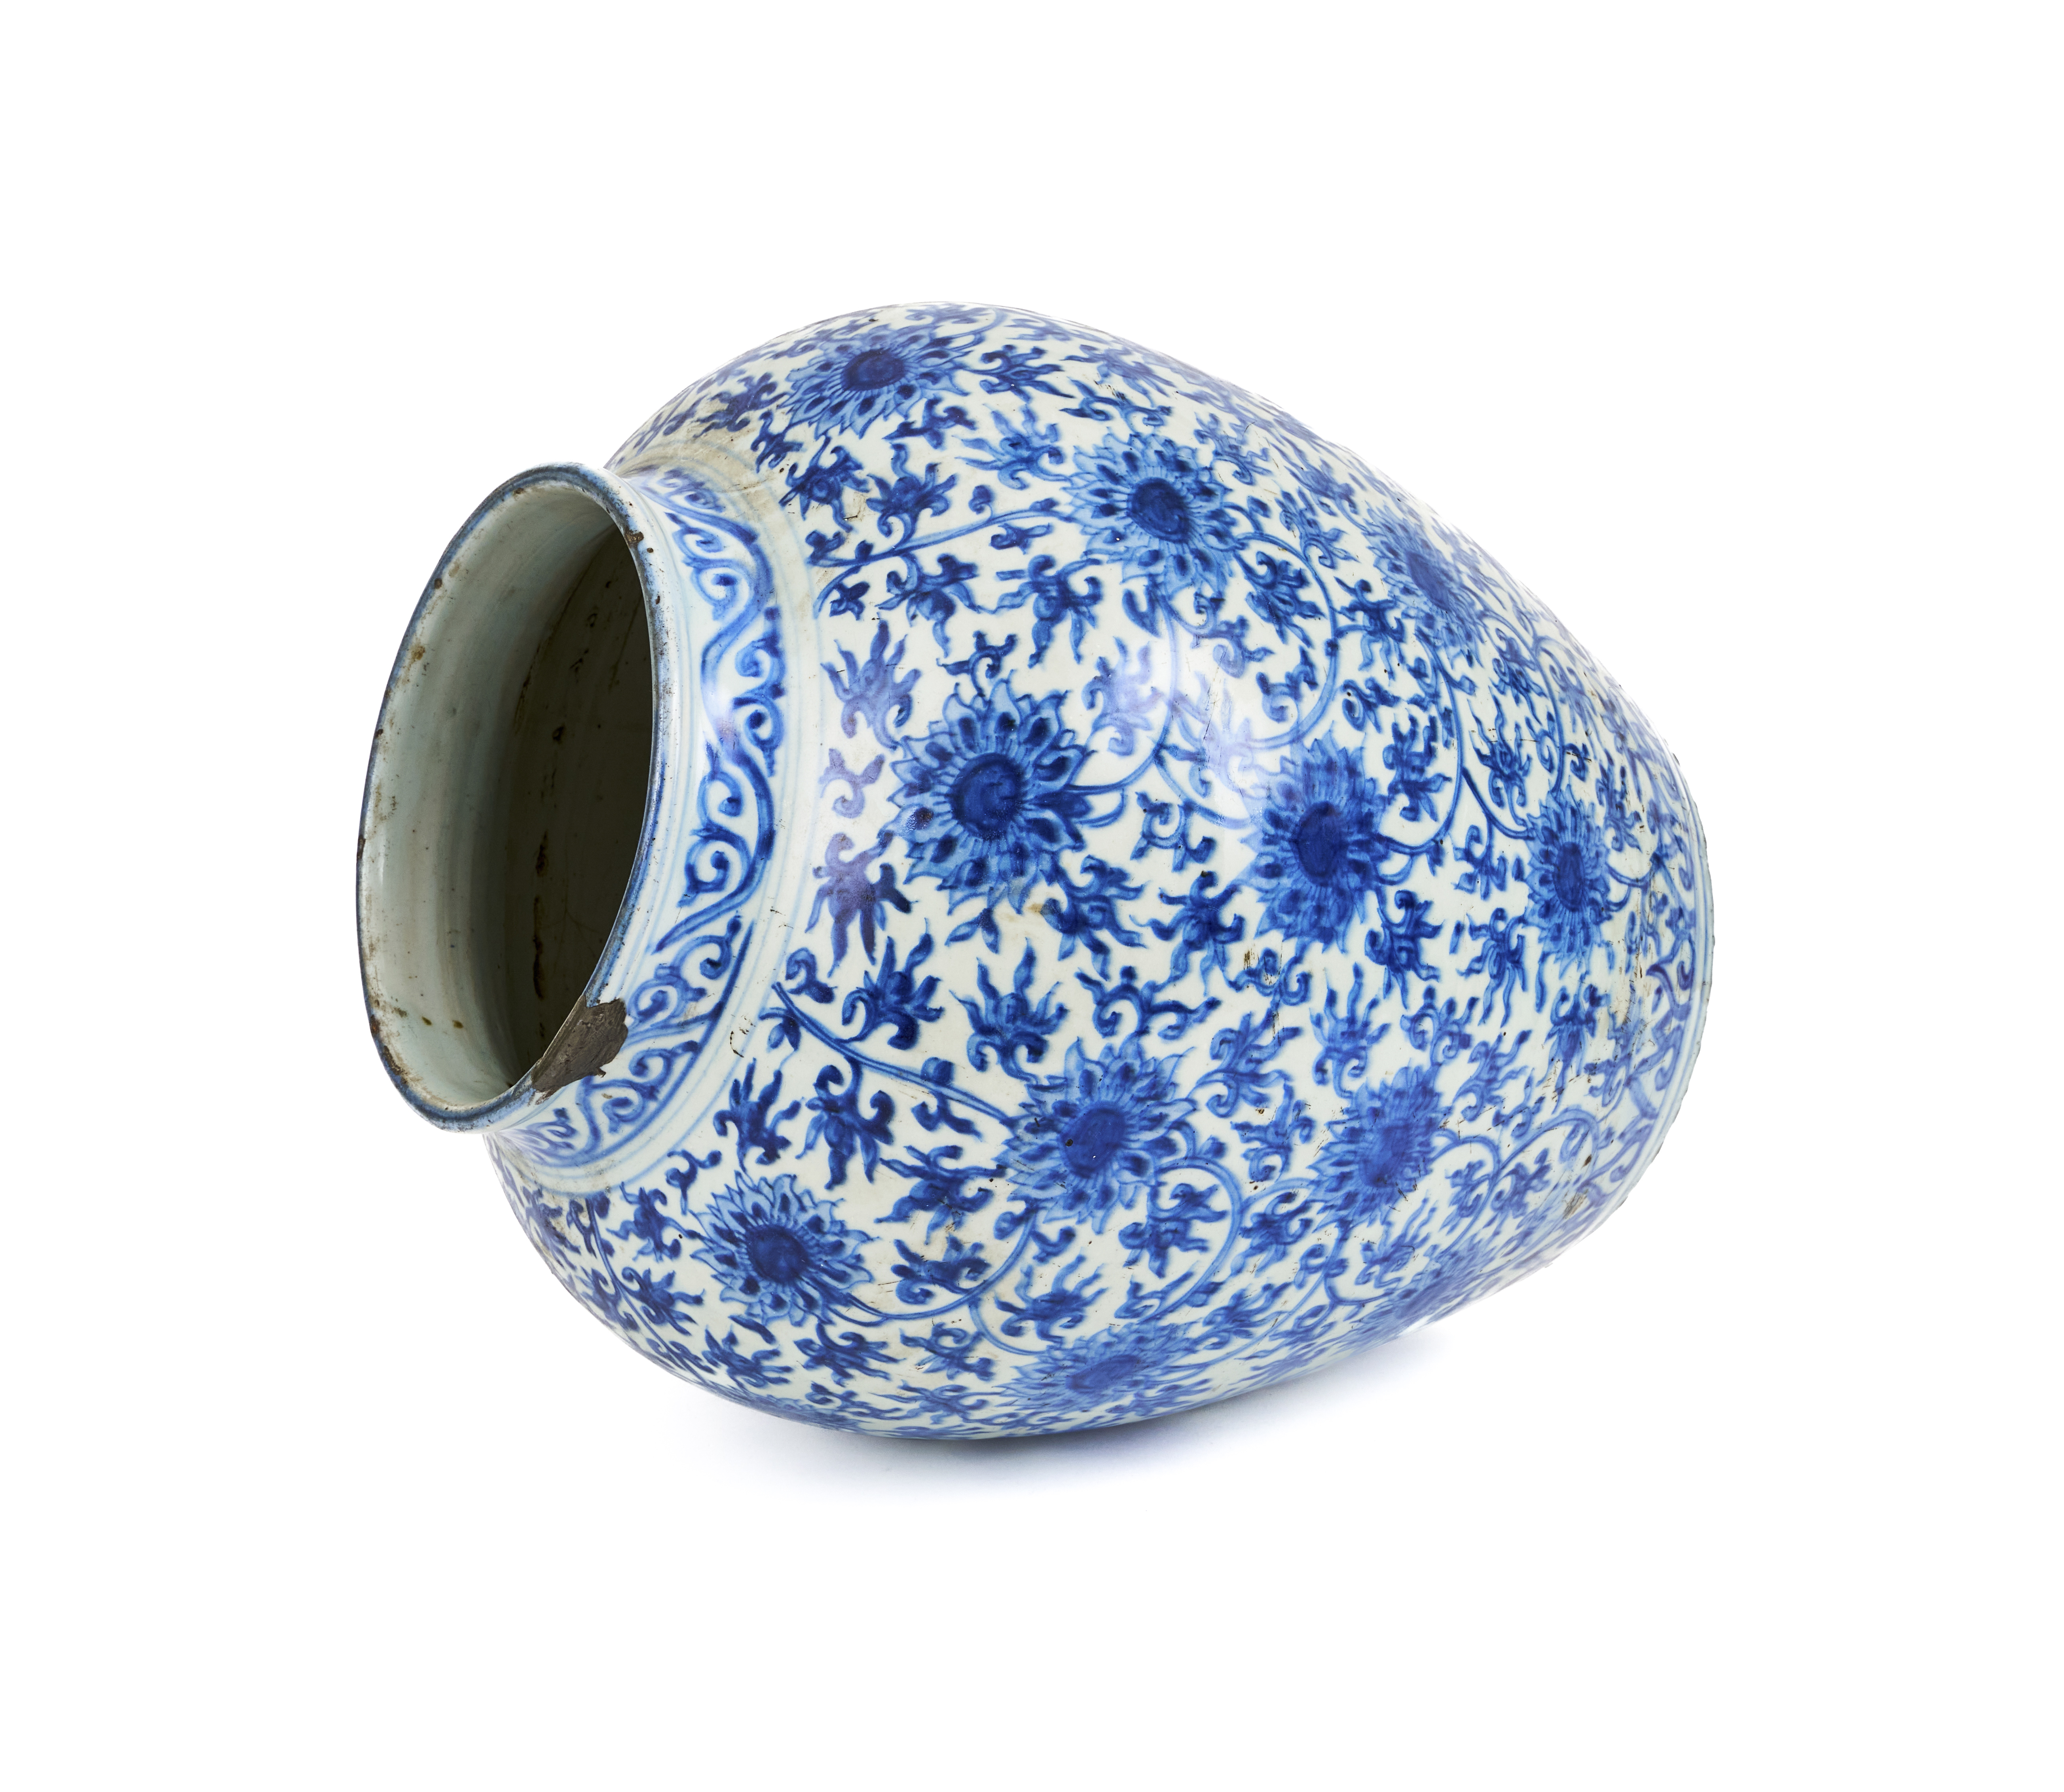 A LARGE BLUE & WHITE LOTUS JAR, MING DYNASTY (1368-1644) - Image 3 of 3